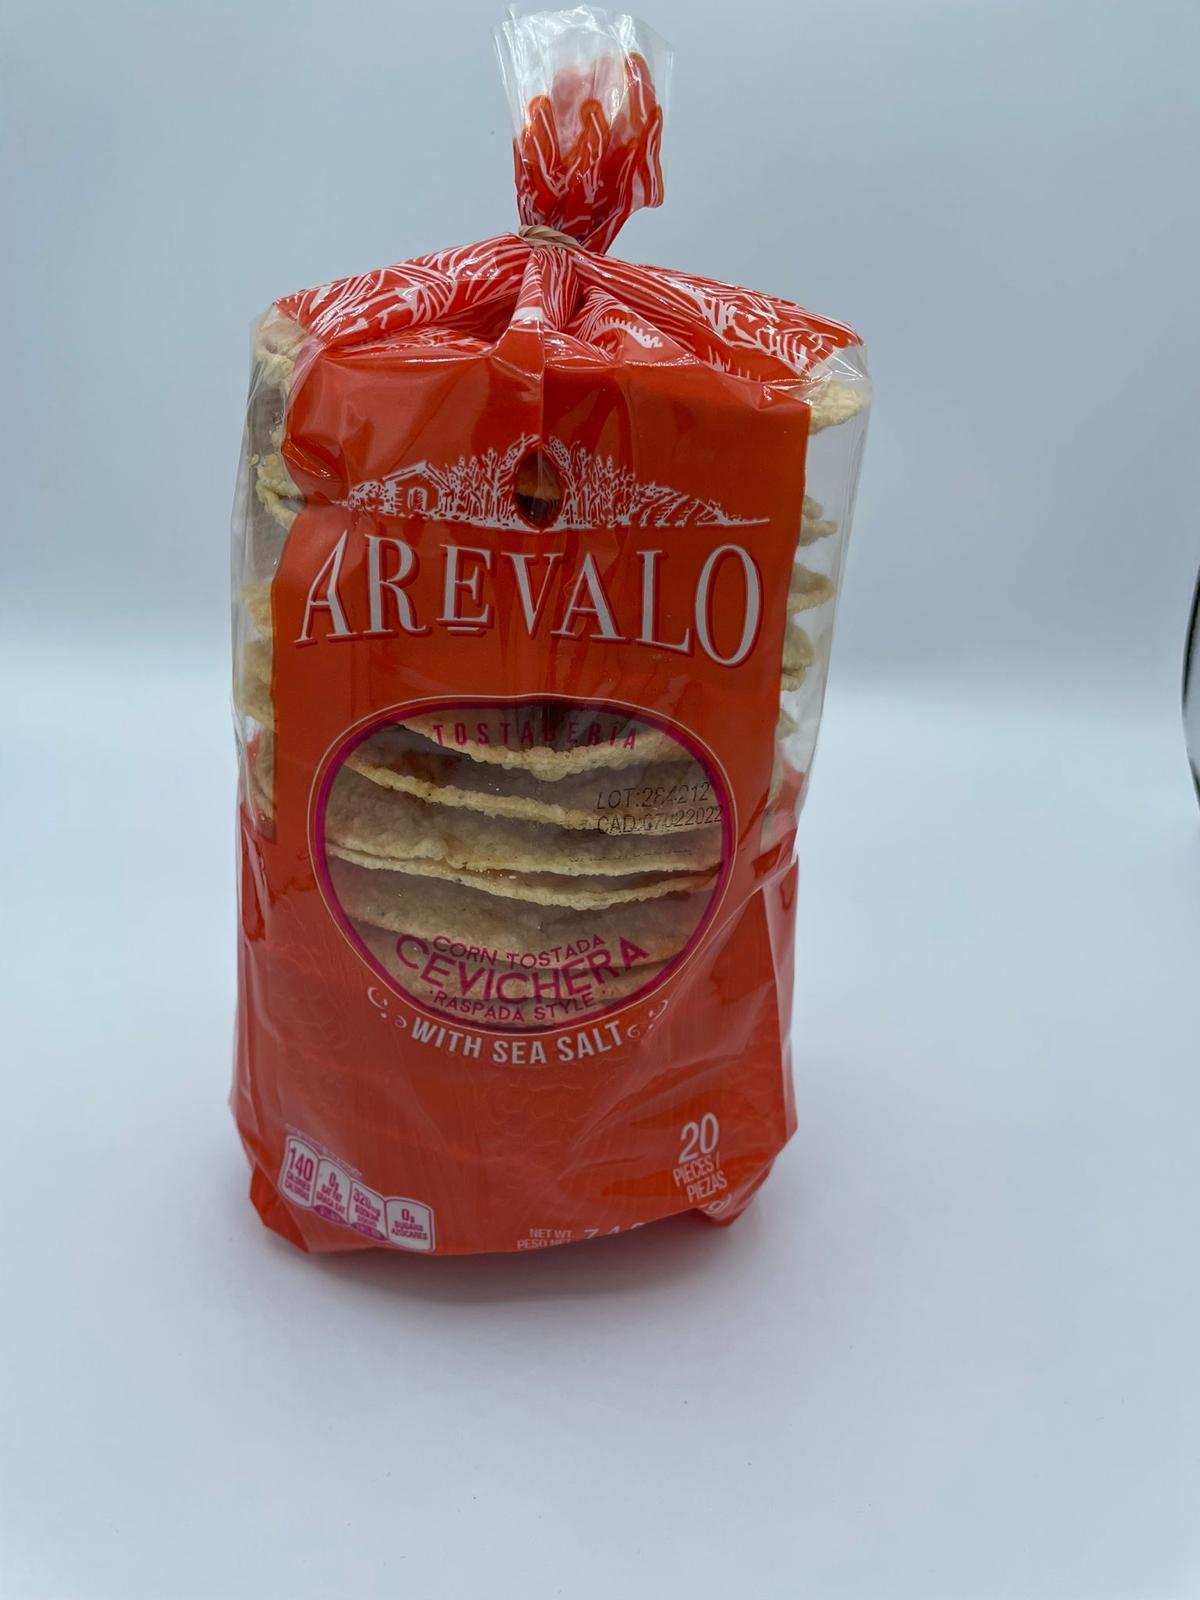 AREVALO Frittierte Maistortillas – Tostadas 210g MHD OKT21